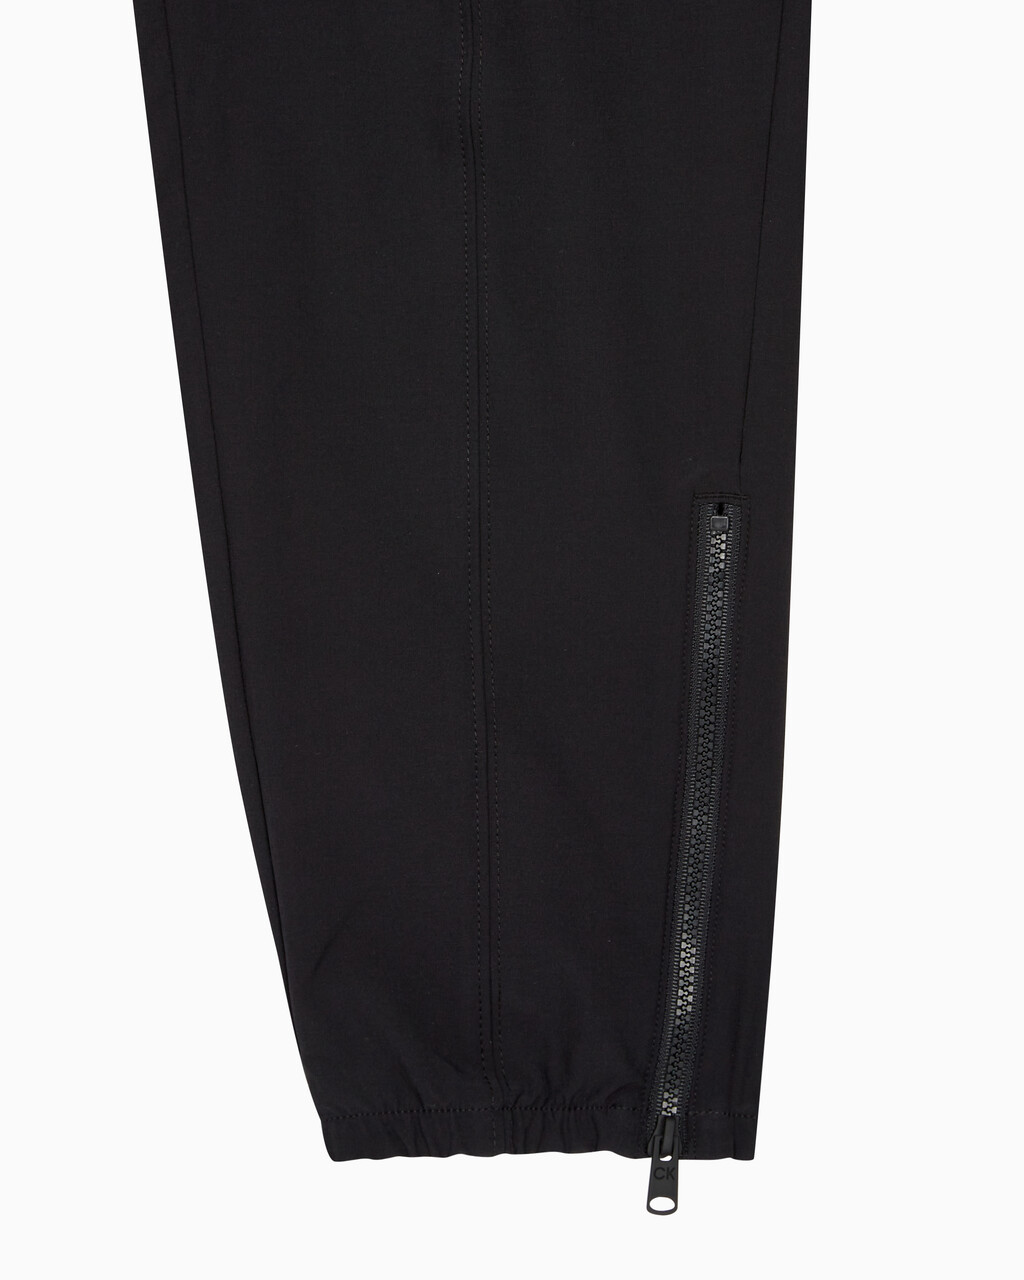 Buy 여성 리플렉티브 로고 레귤러 핏 기능성 우븐 팬츠 in color BLACK